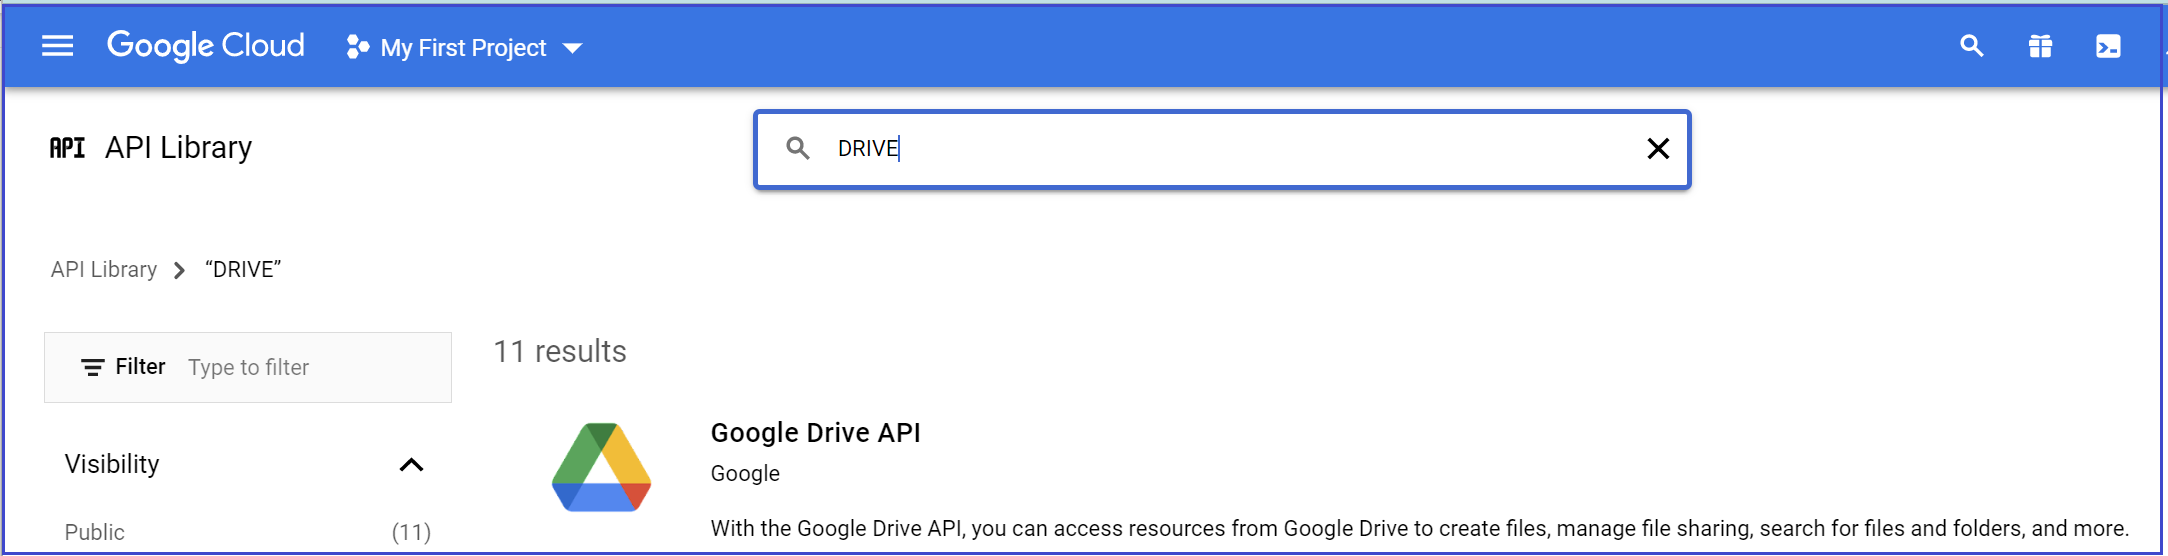 API-DRIVE.png